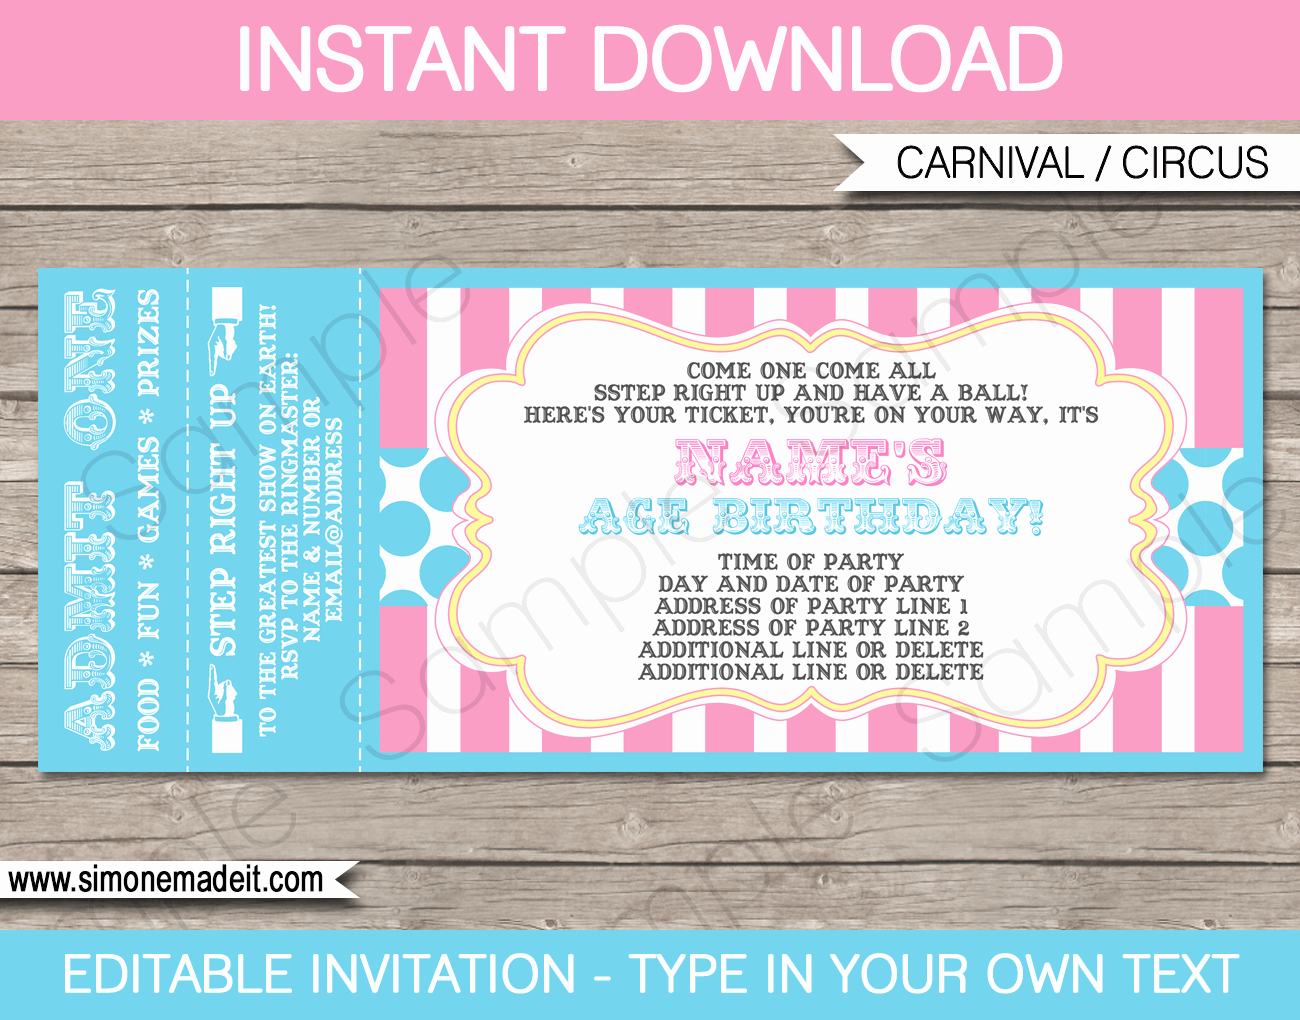 Ticket Invitation Templates Free Best Of Carnival Party Ticket Invitations Template